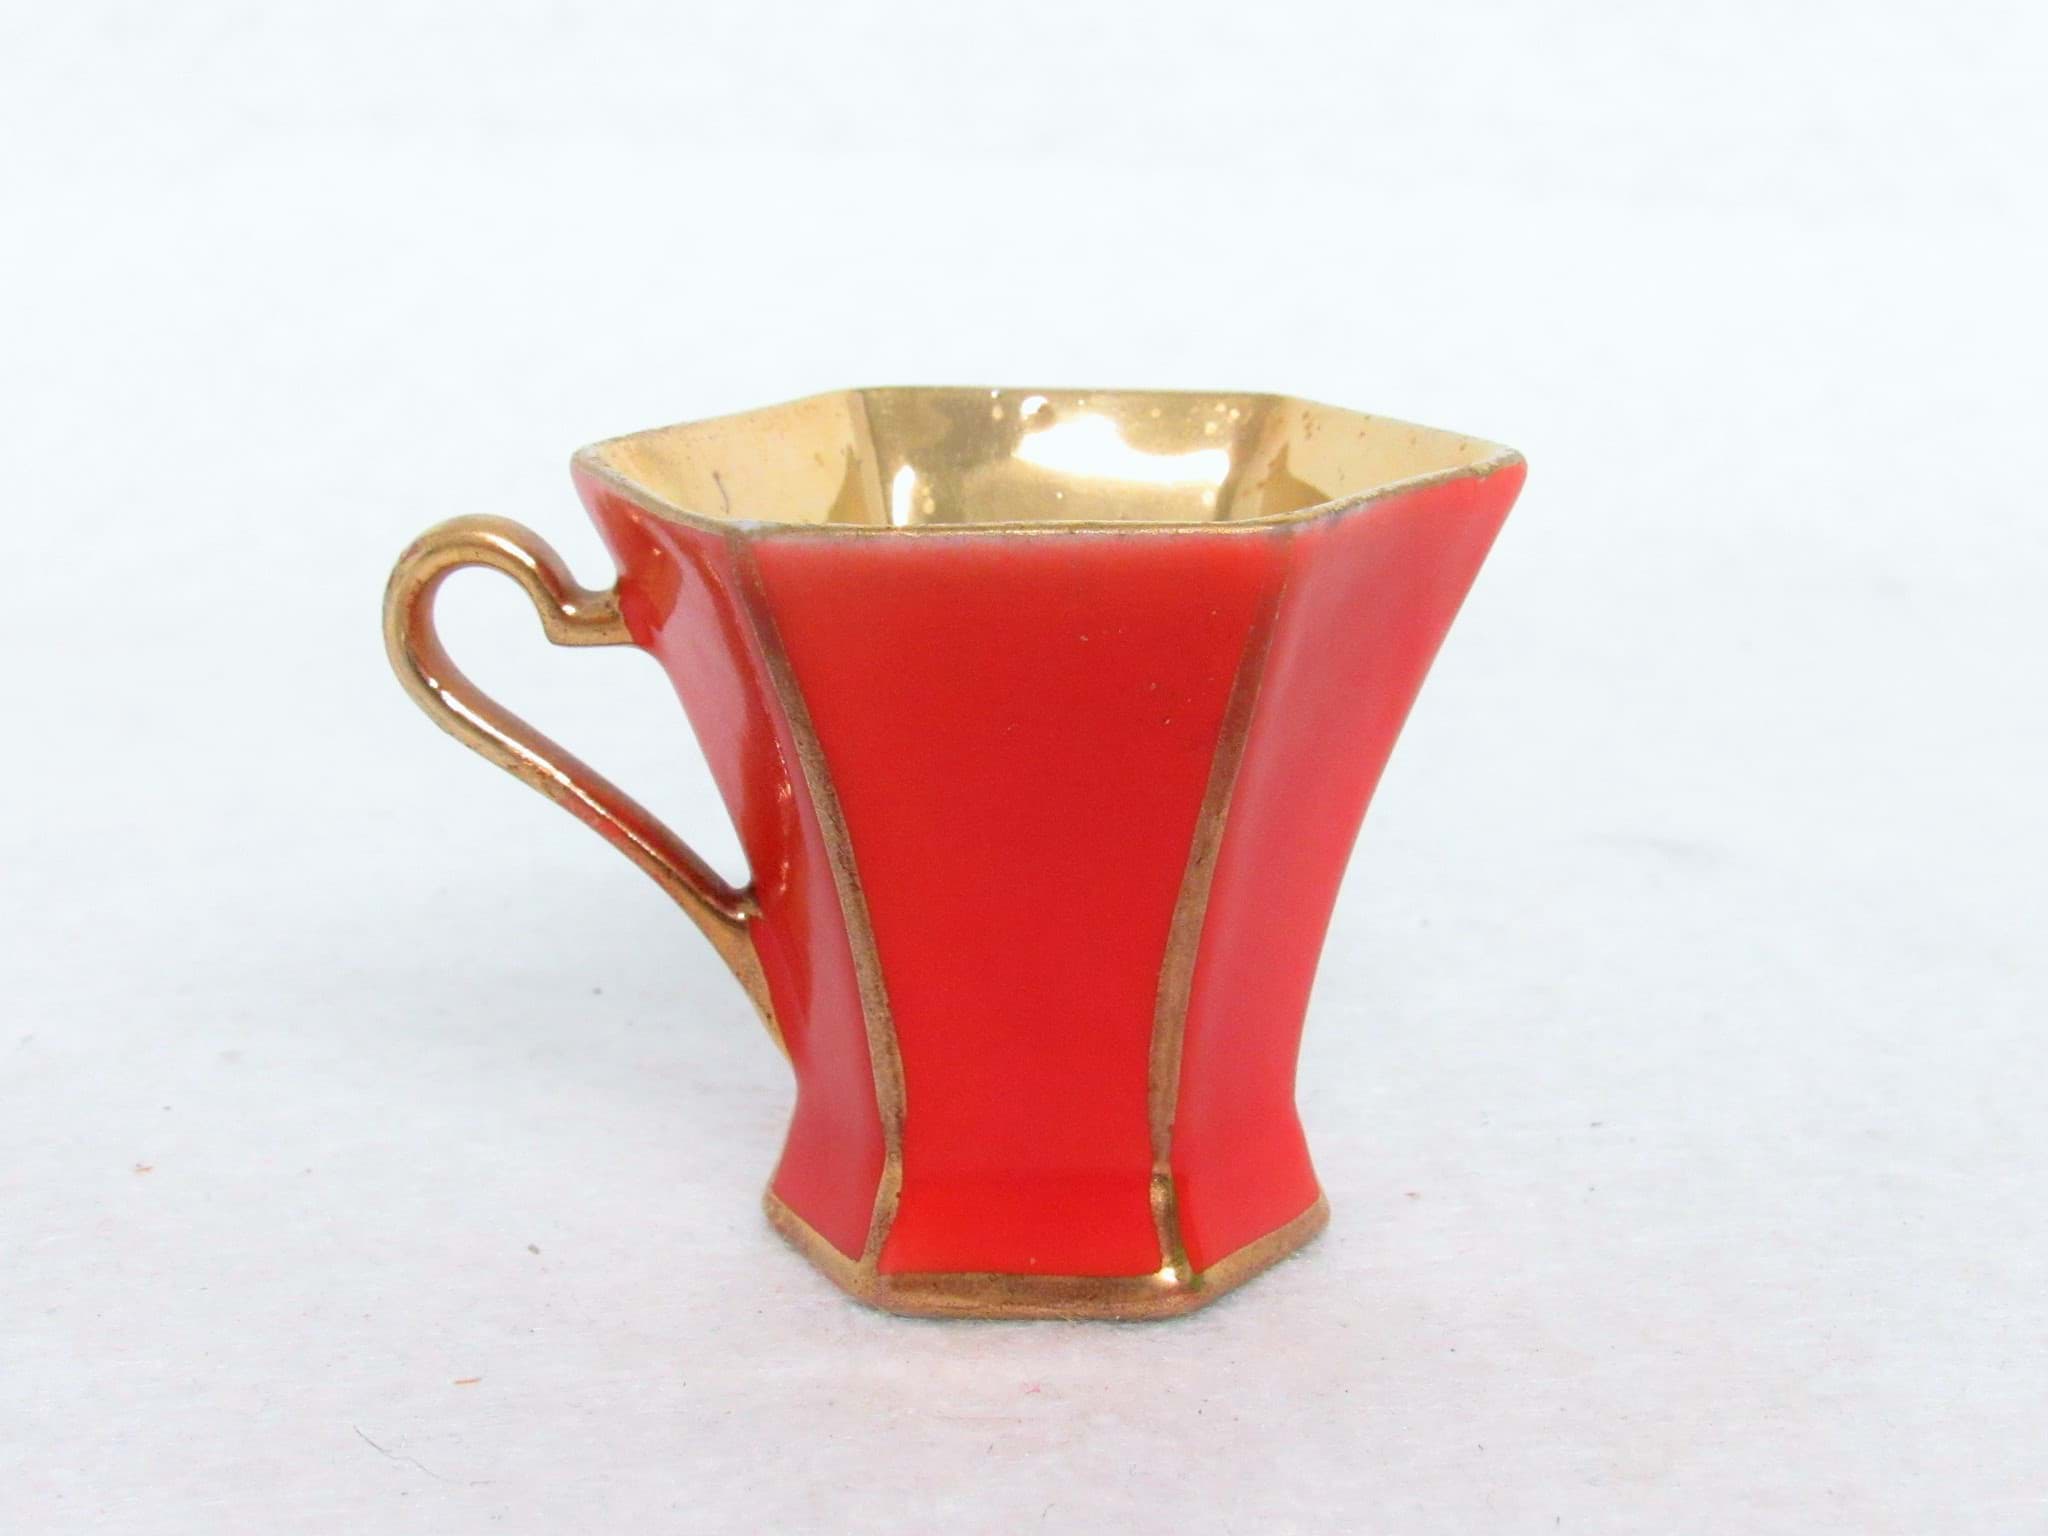 Afbeelding van Biedermeier Porzellan Tasse wohl um 1830/40, Rot & Gold, antik, Spielzeug Modell